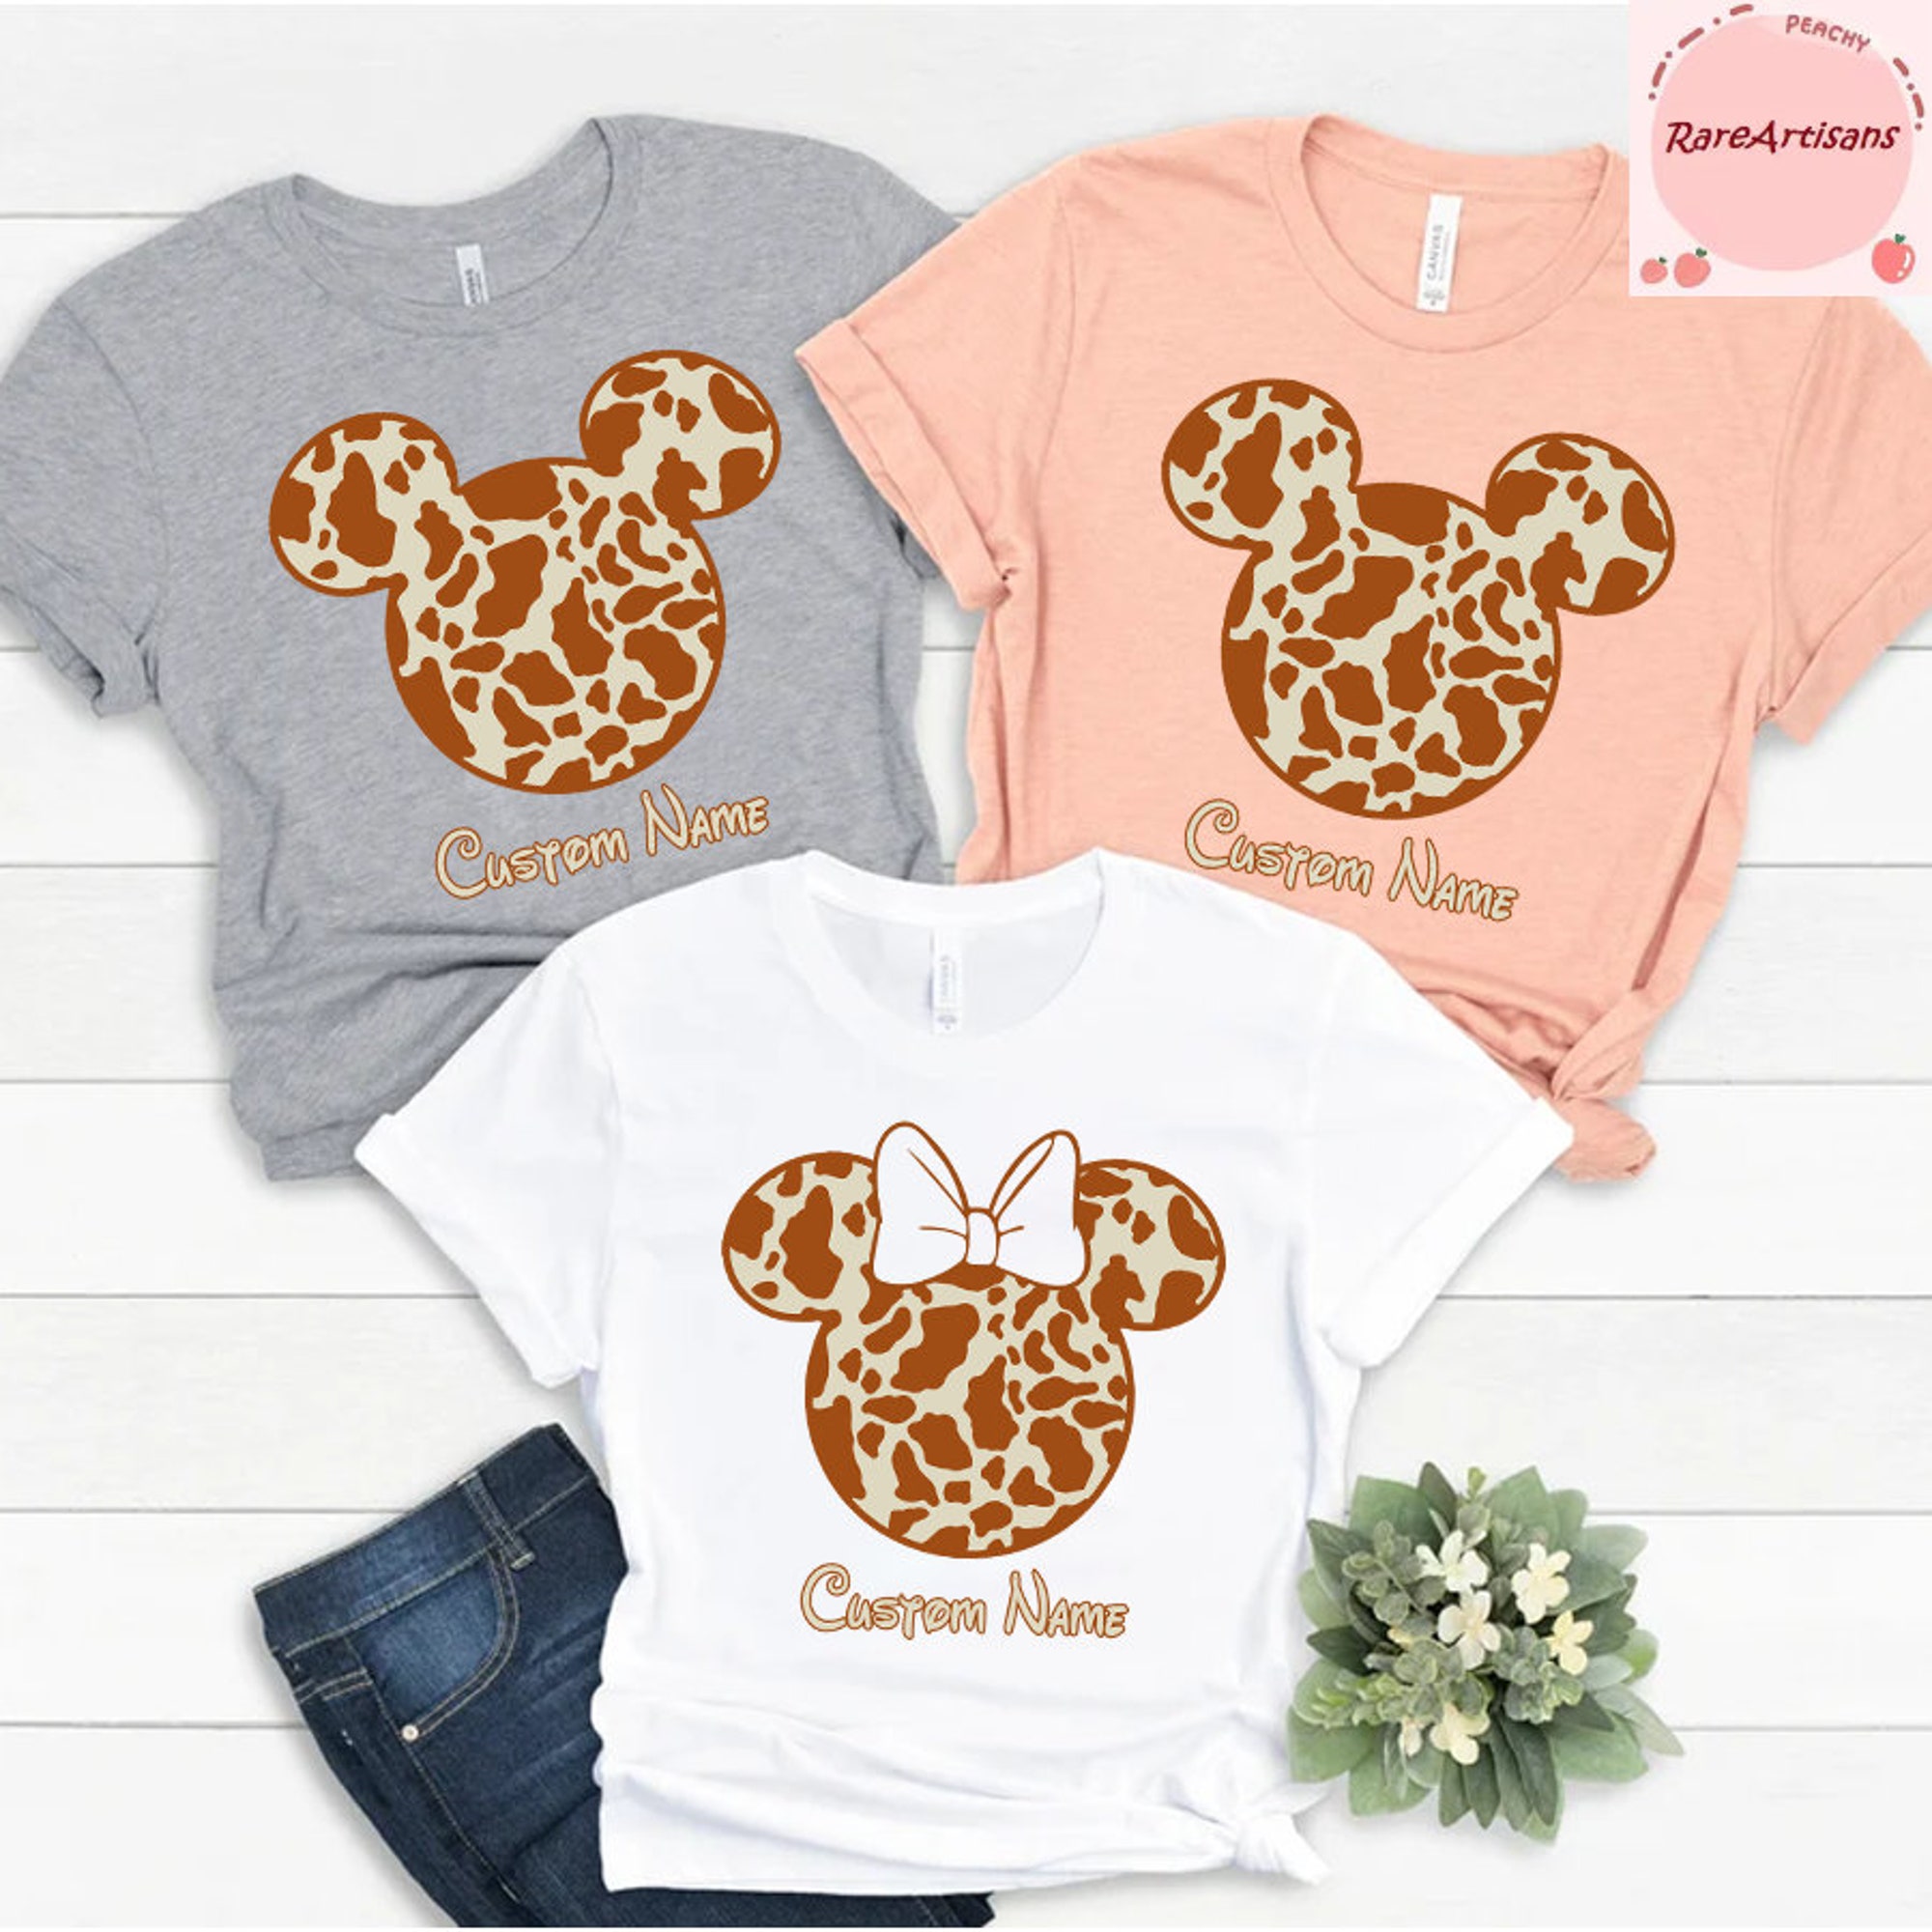 Discover Disney Animal Kingdom Shirt, Mickey Minnie Leopard Shirt